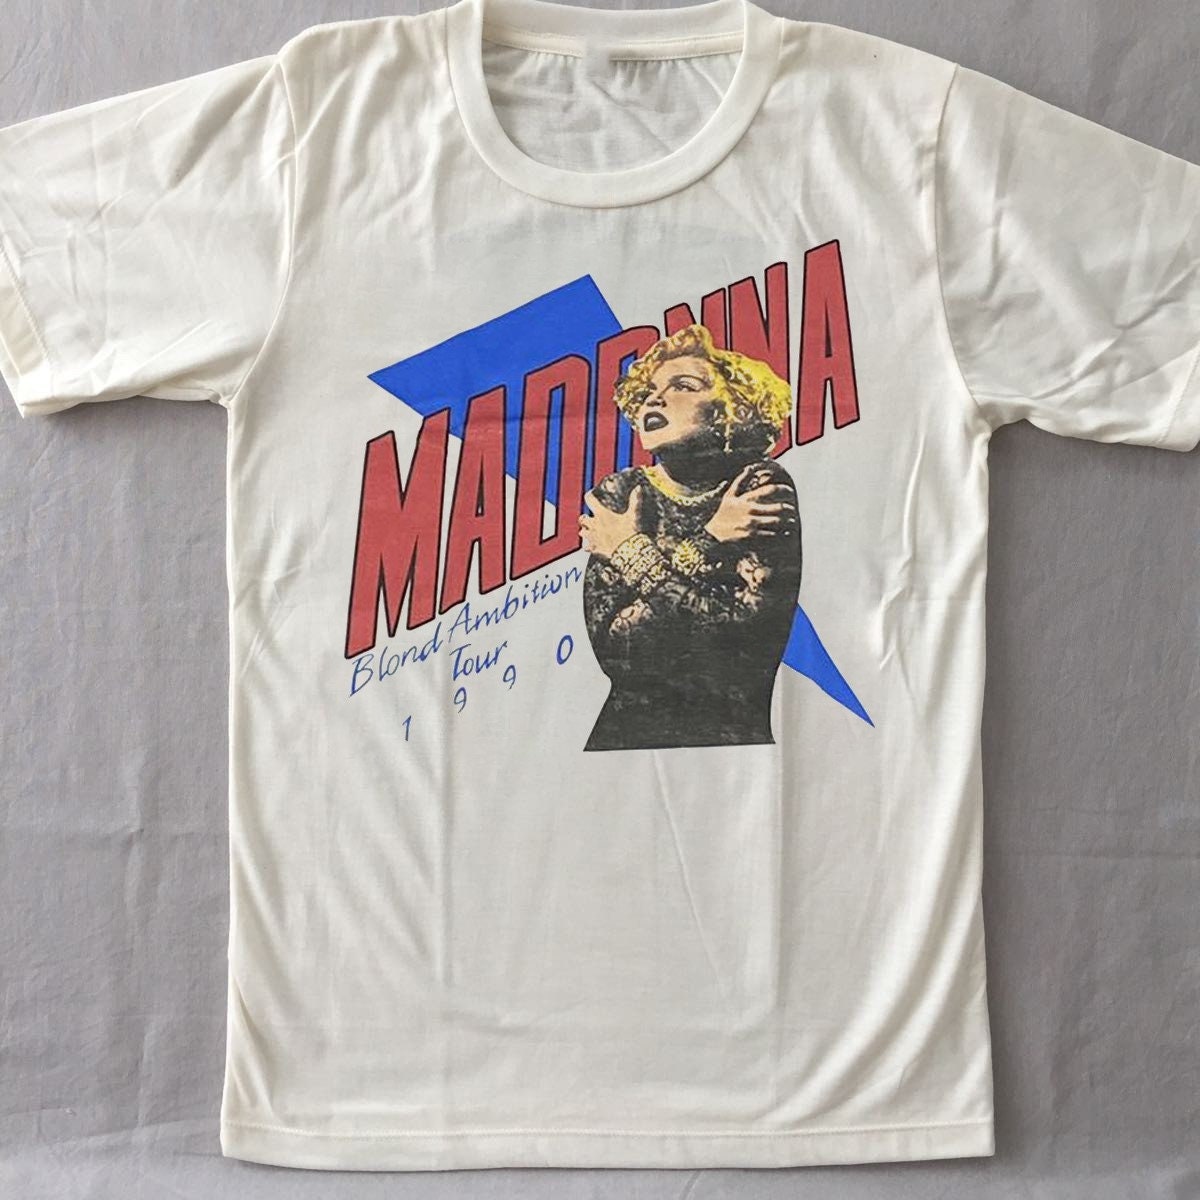 Madonna Blond Ambition Tour 1990 T-Shirt, Madonna Tour 1990 T-Shirt, Madonna 90s Tour Shirt